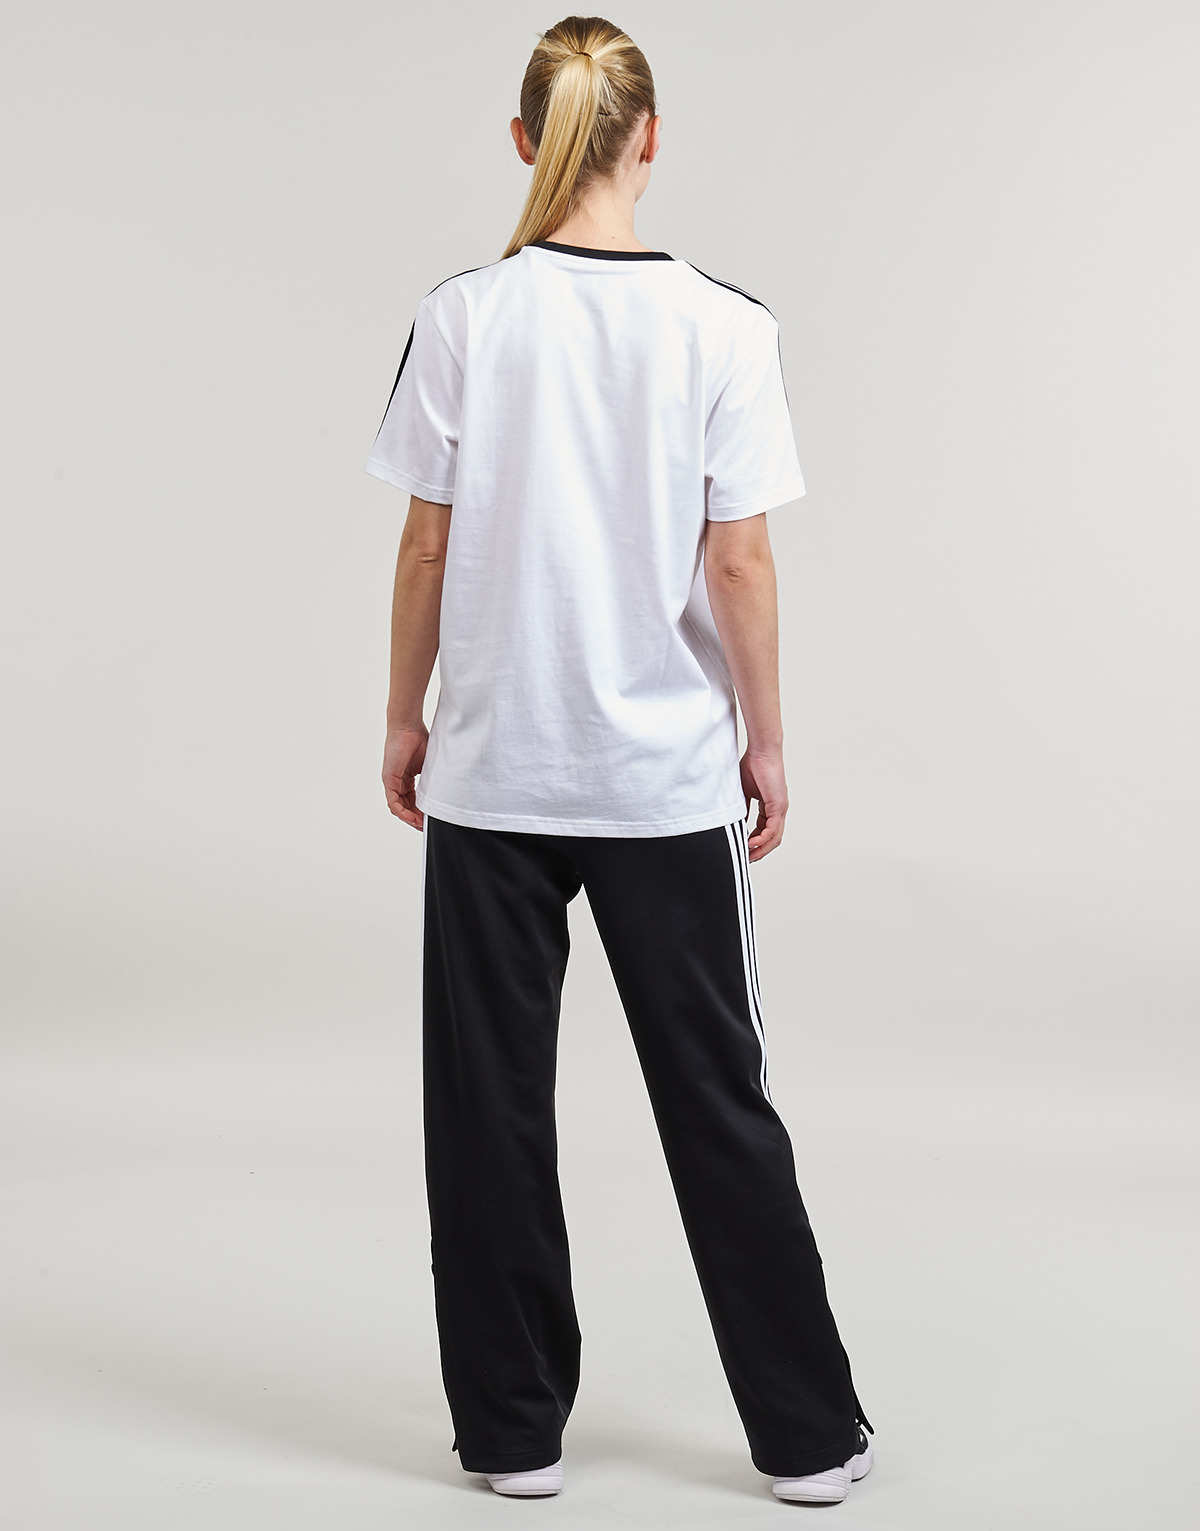 Adidas Sportswear Blanc / Noir W 3S BF T qtA3kdRN